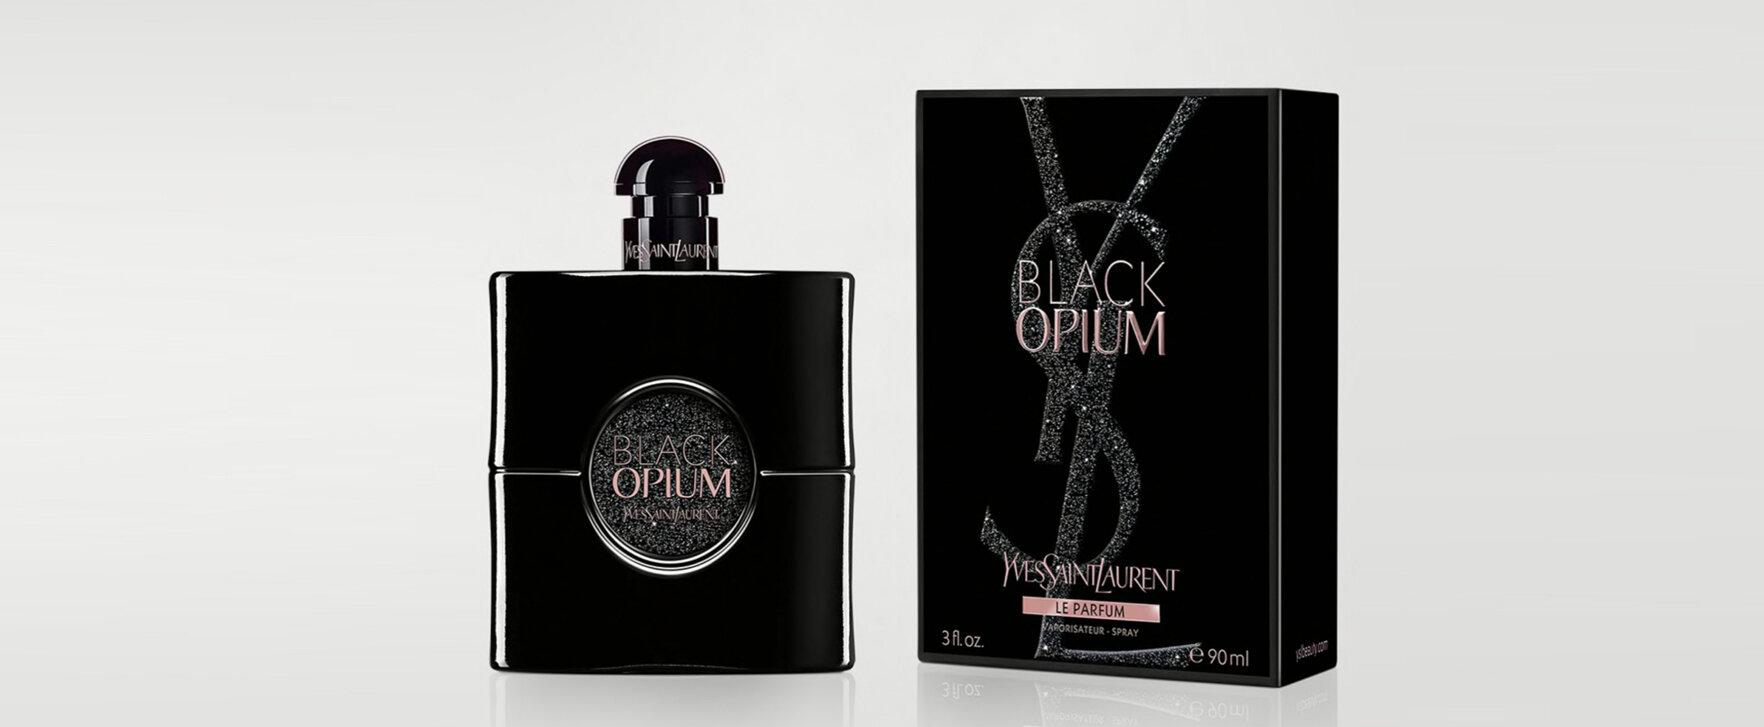 “Black Opium Le Parfum” - New Warm Vanilla Fragrance for Women by Yves Saint Laurent